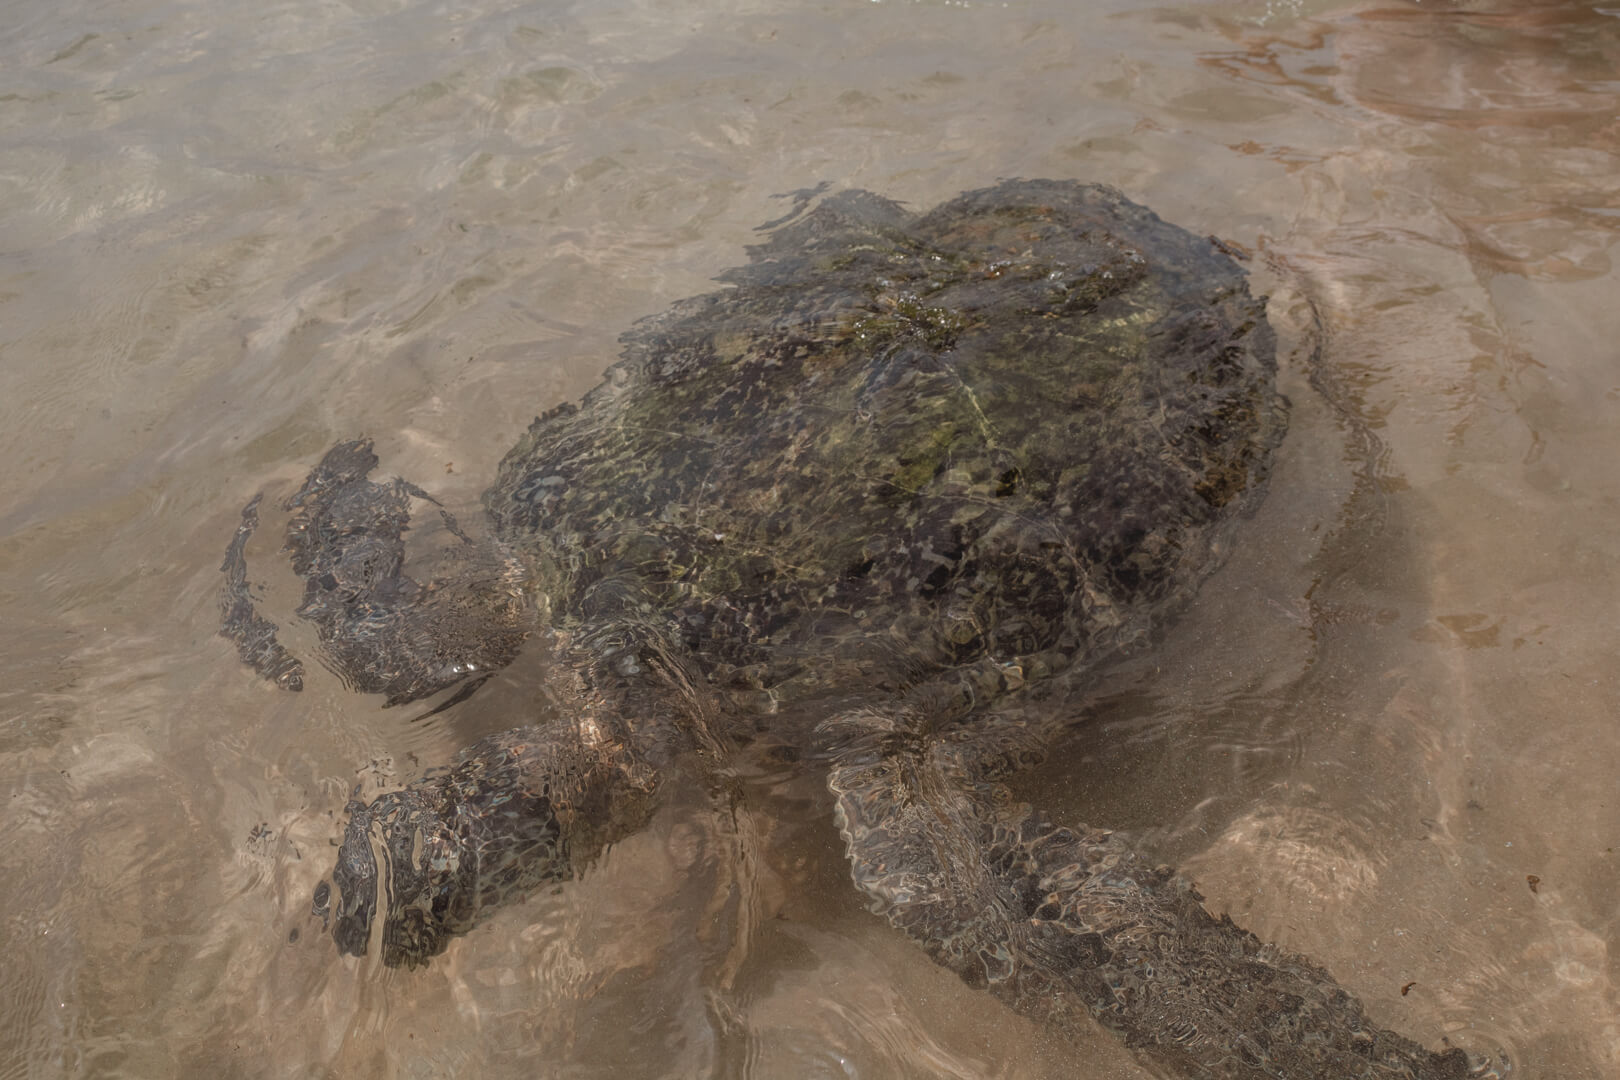 Sea turtle swimming in Hikkaduwa, Sri Lanka